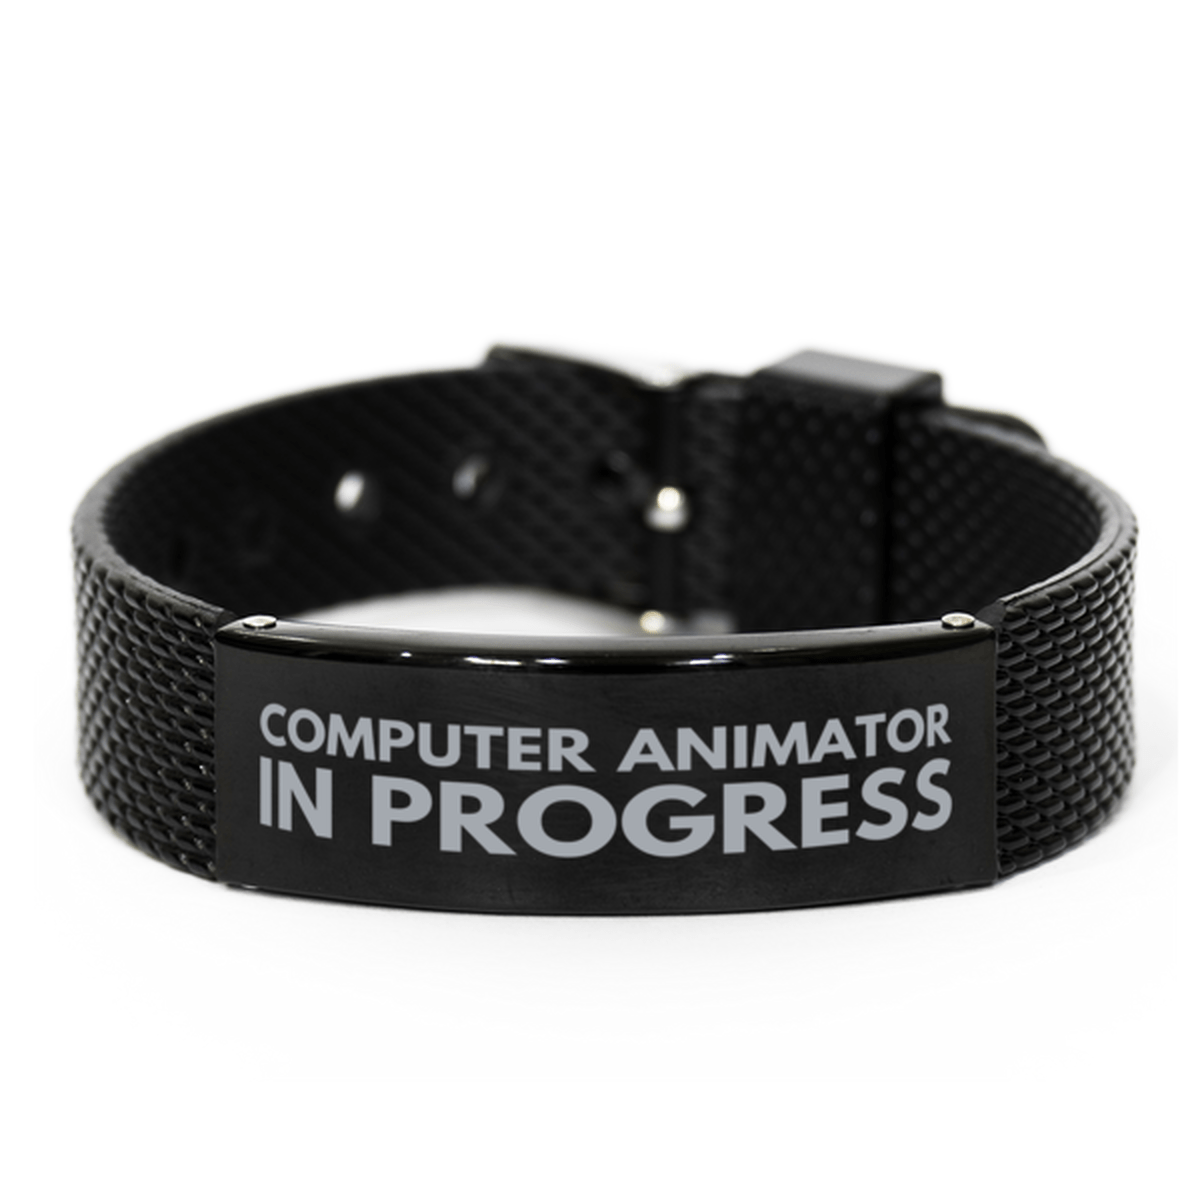 Inspirational Computer Animator Black Shark Mesh Bracelet, Computer Animator In Progress, Best Graduation Gifts for Students